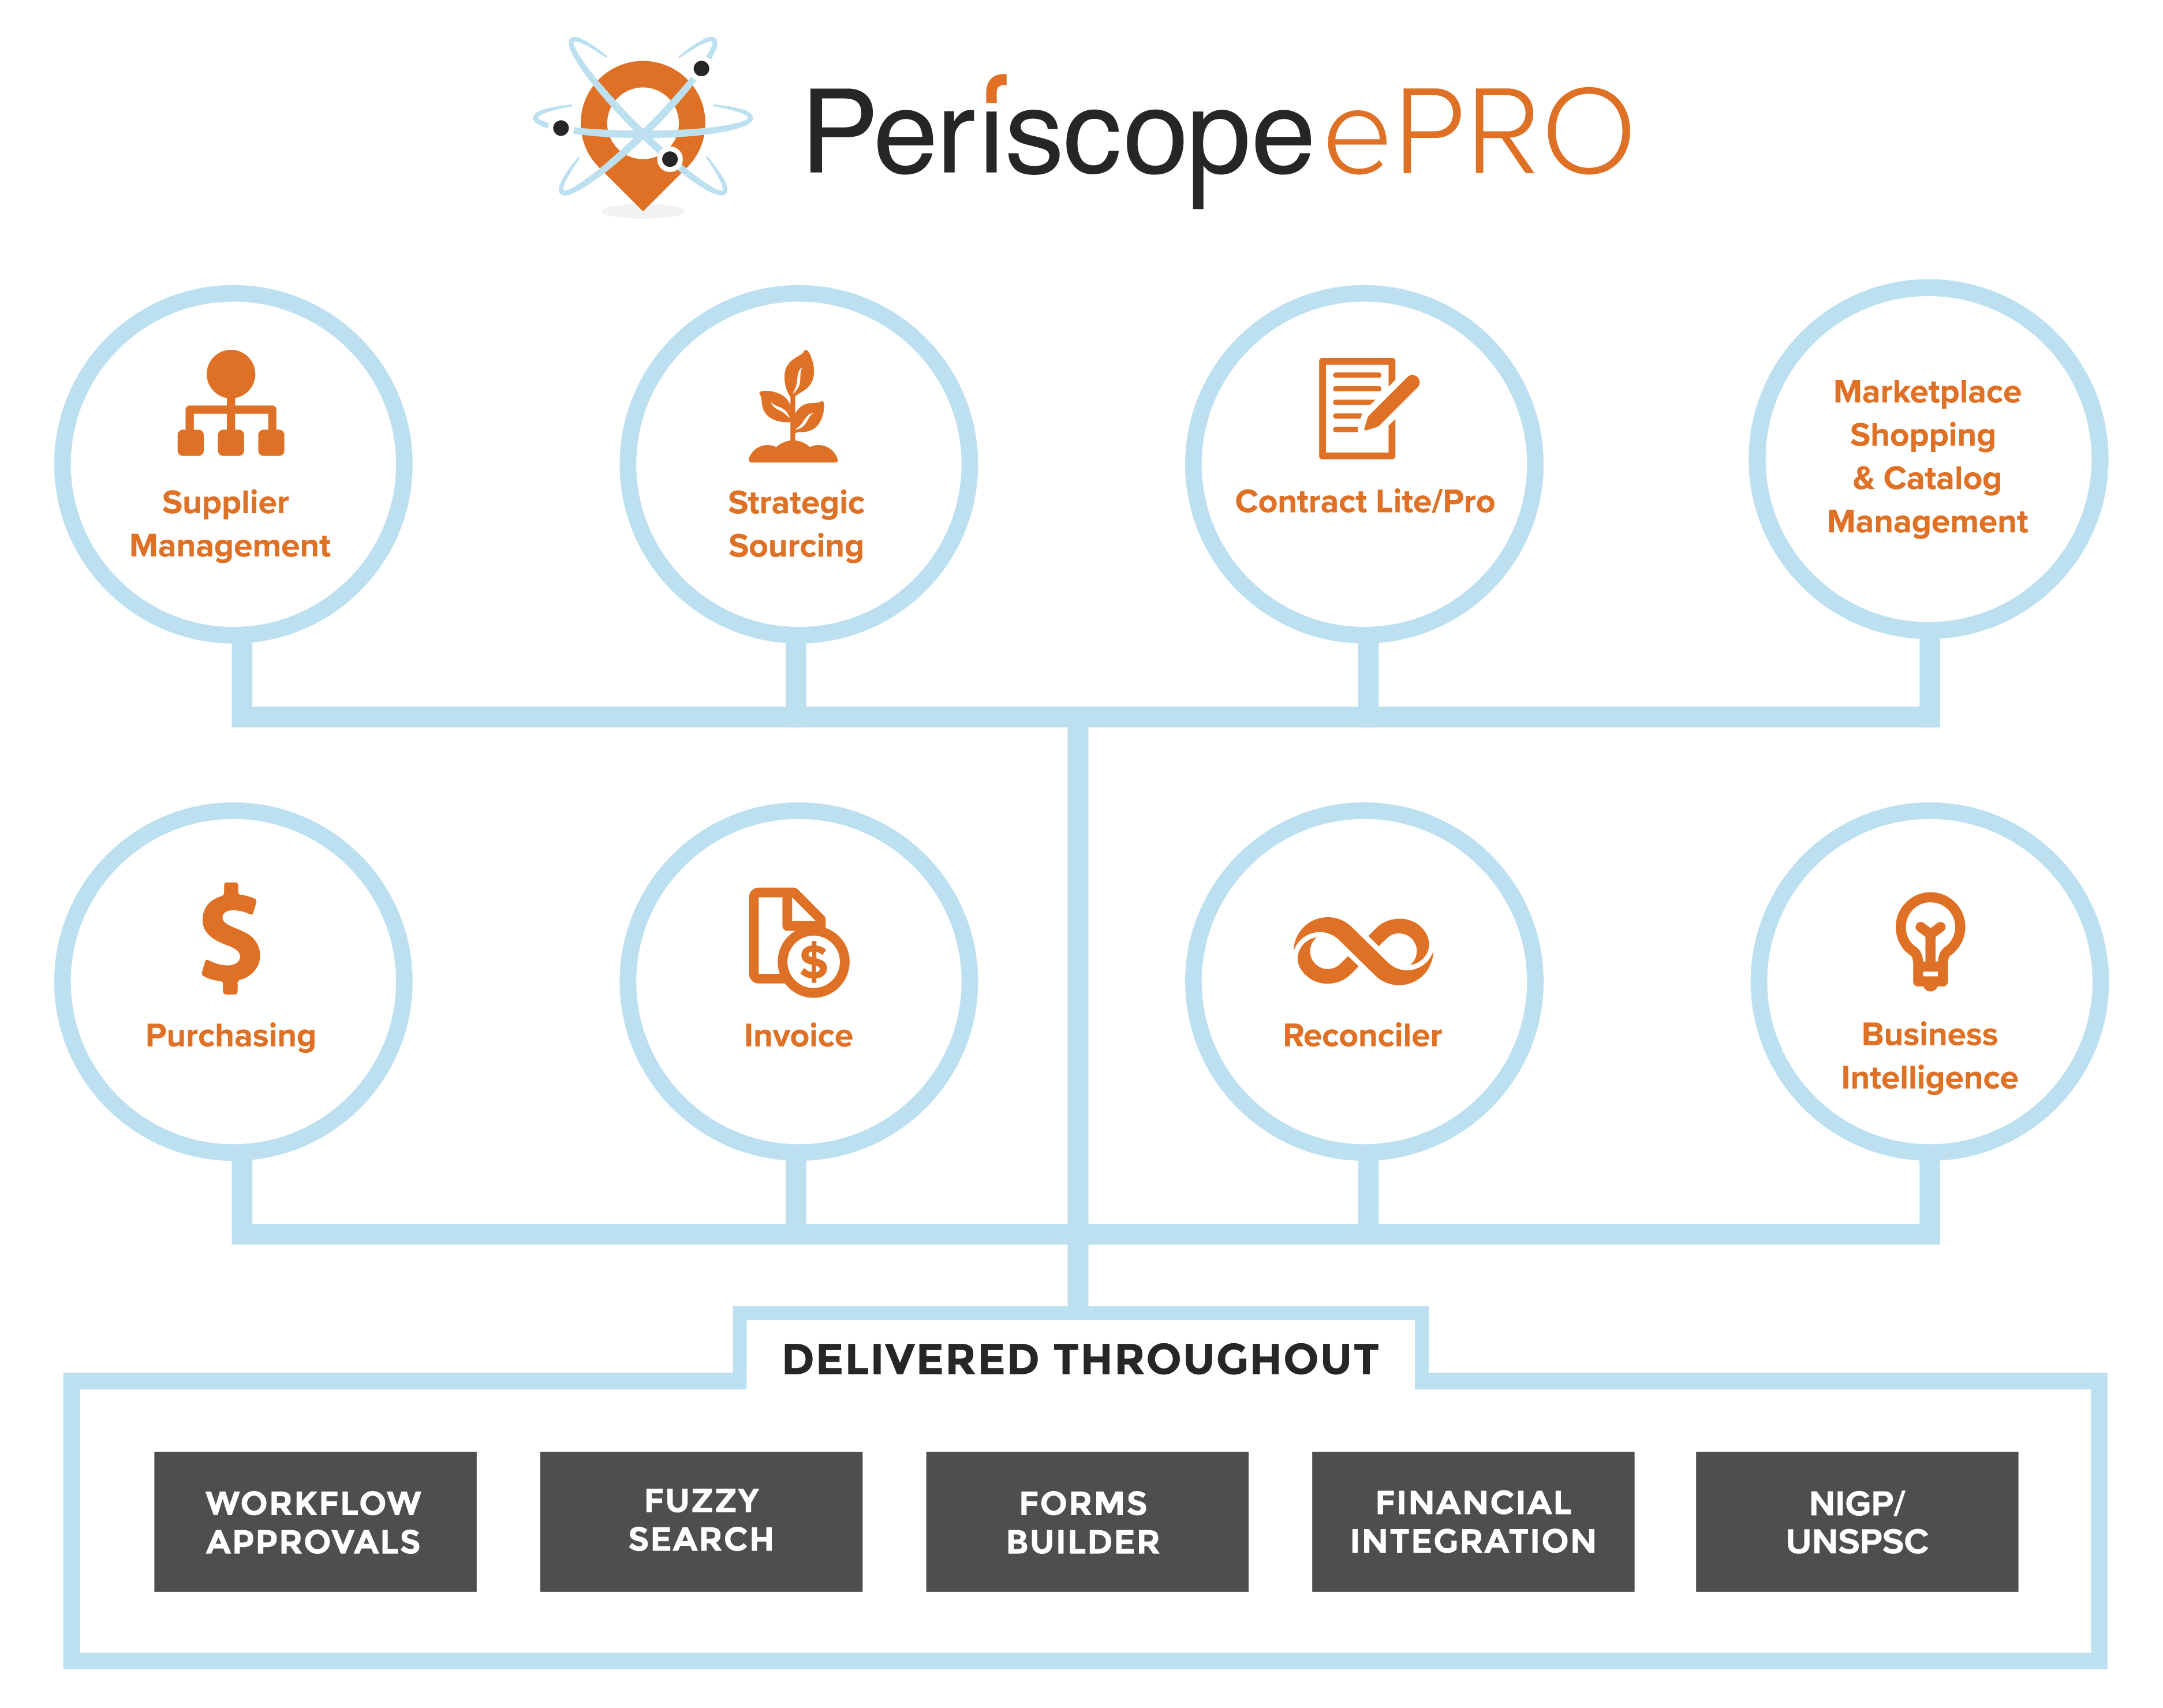 Periscope eprocurement software capabilities